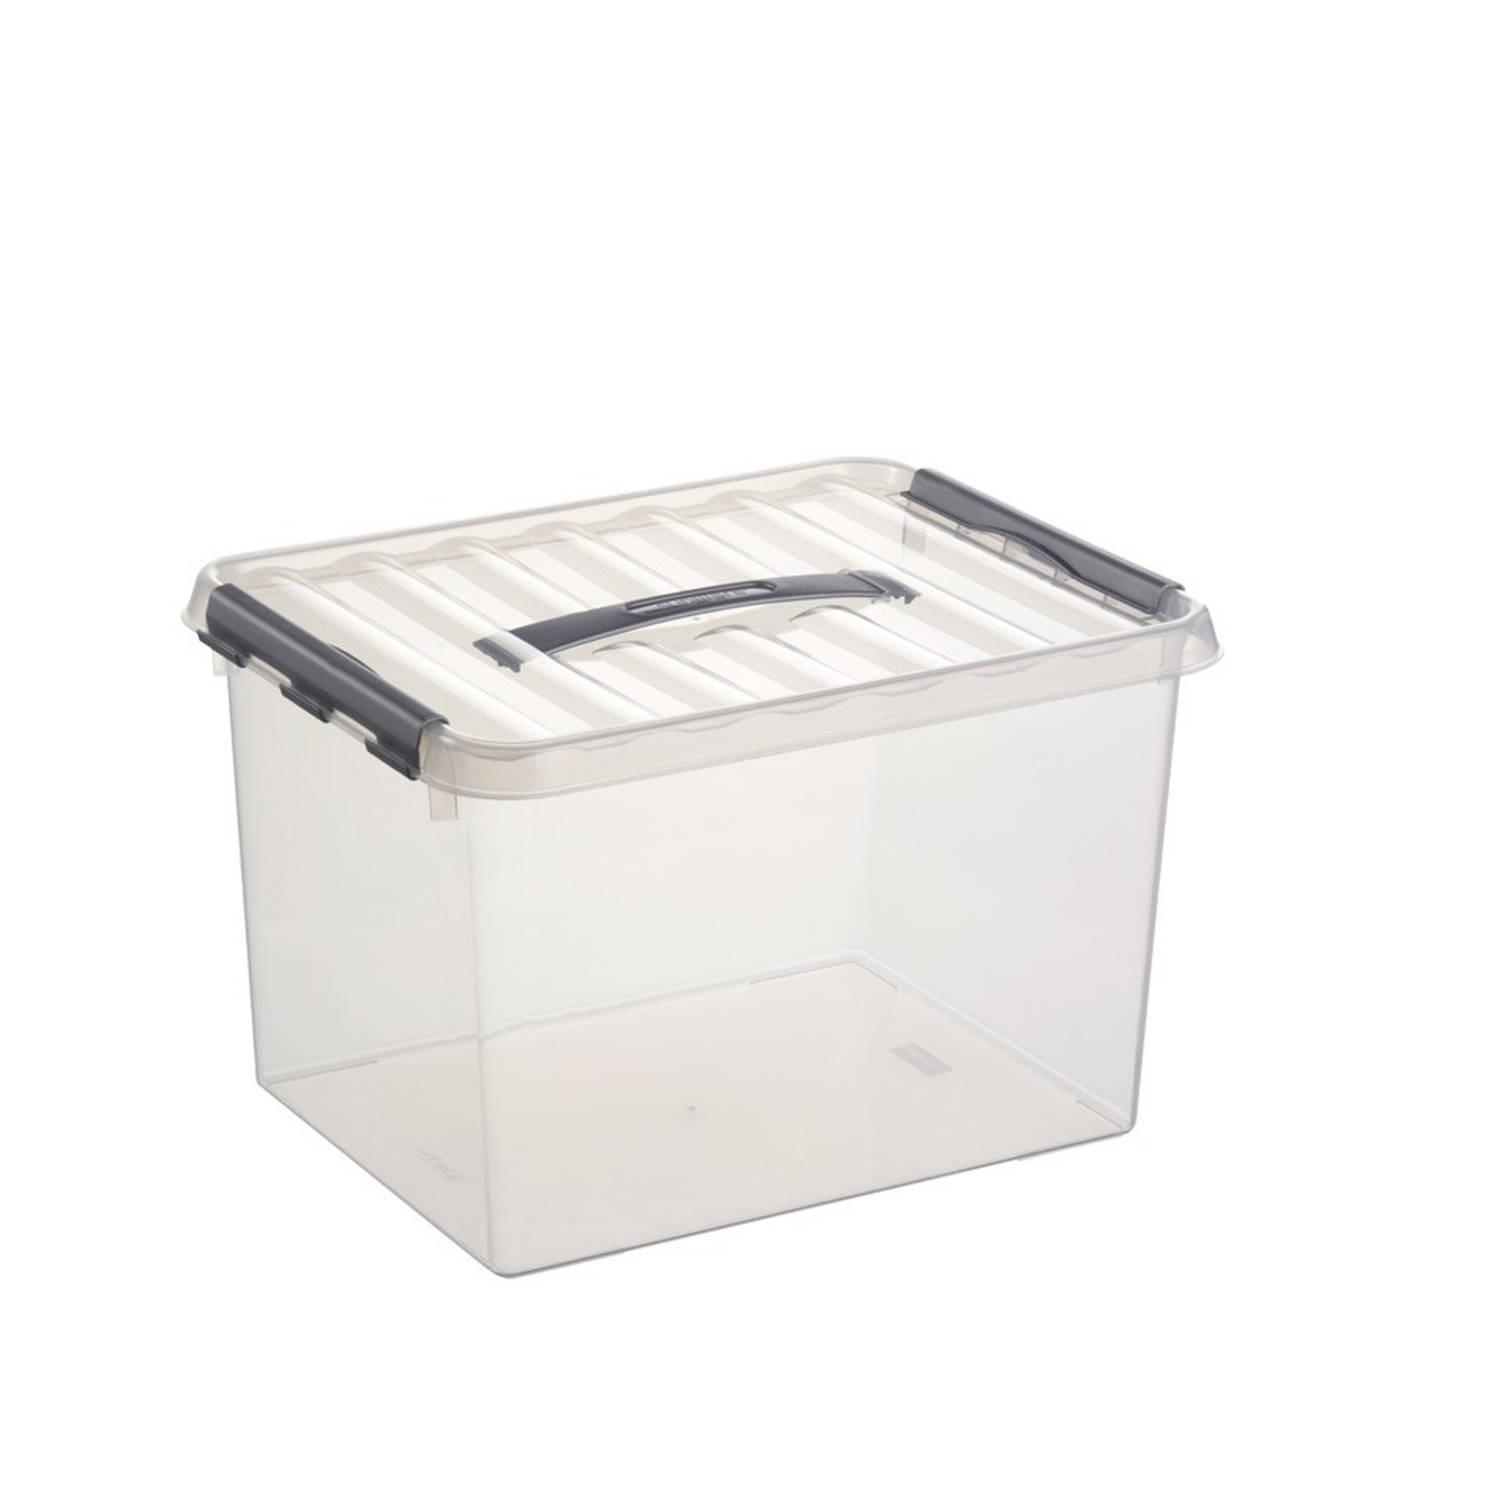 Sunware Q-line opbergbox 22 liter transparant-metaal